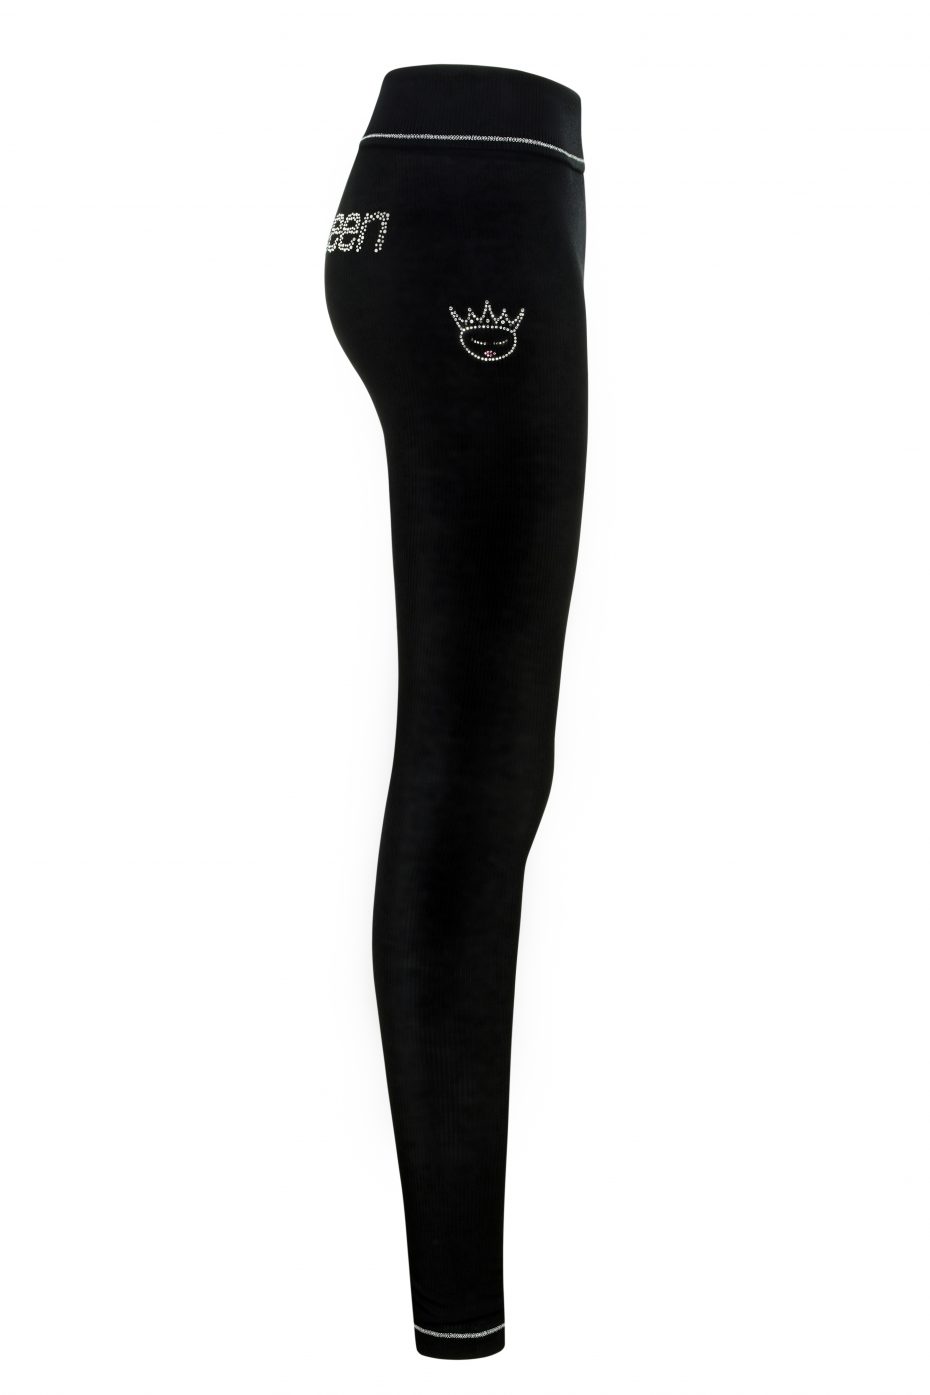 S'No Queen black leggings Queen collection side